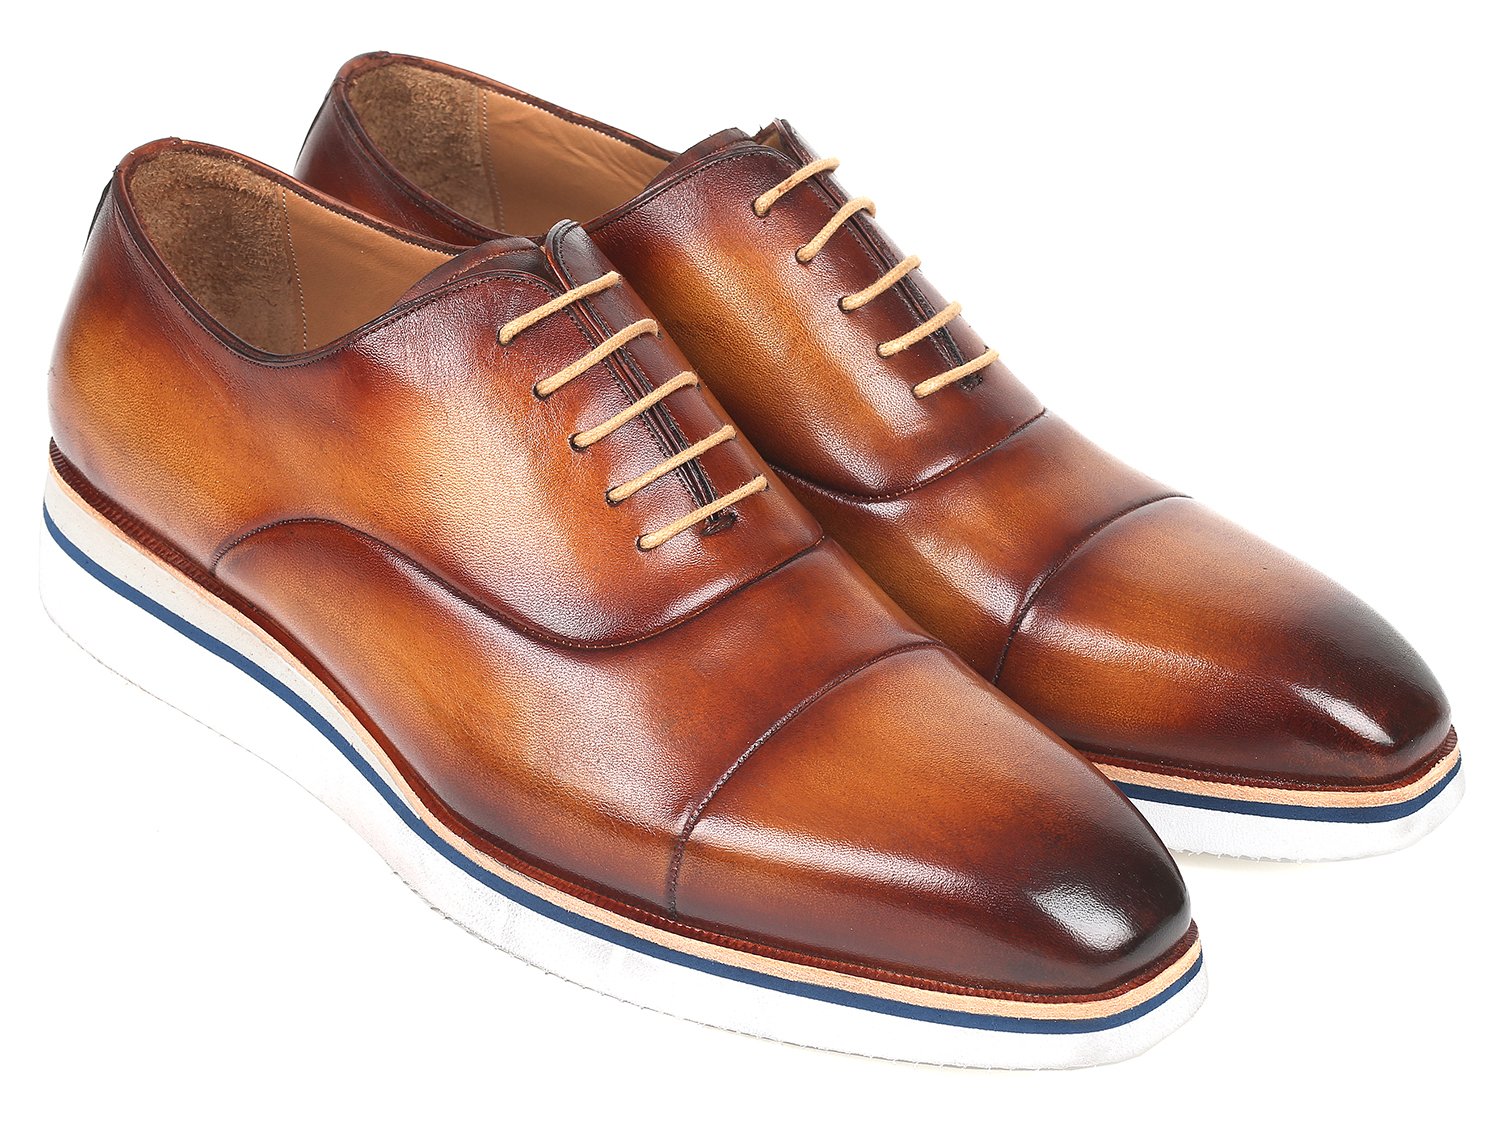 Paul Parkman "185-BRW" Brown / Camel Genuine Calfskin Oxford Shoes .